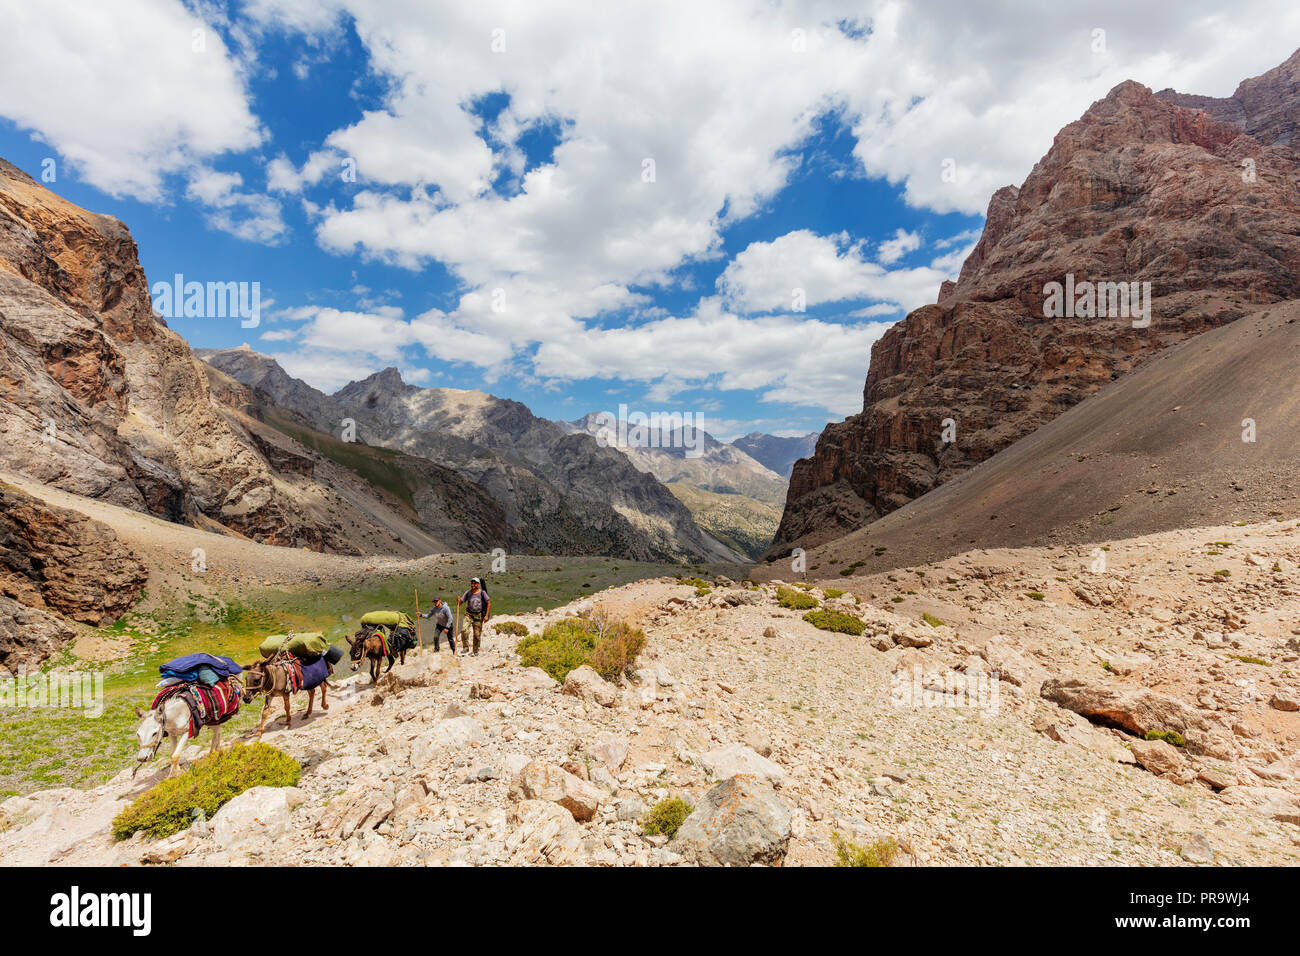 Central Asia, Tajikistan, Fan mountains, donkeys on hiking trail Stock Photo